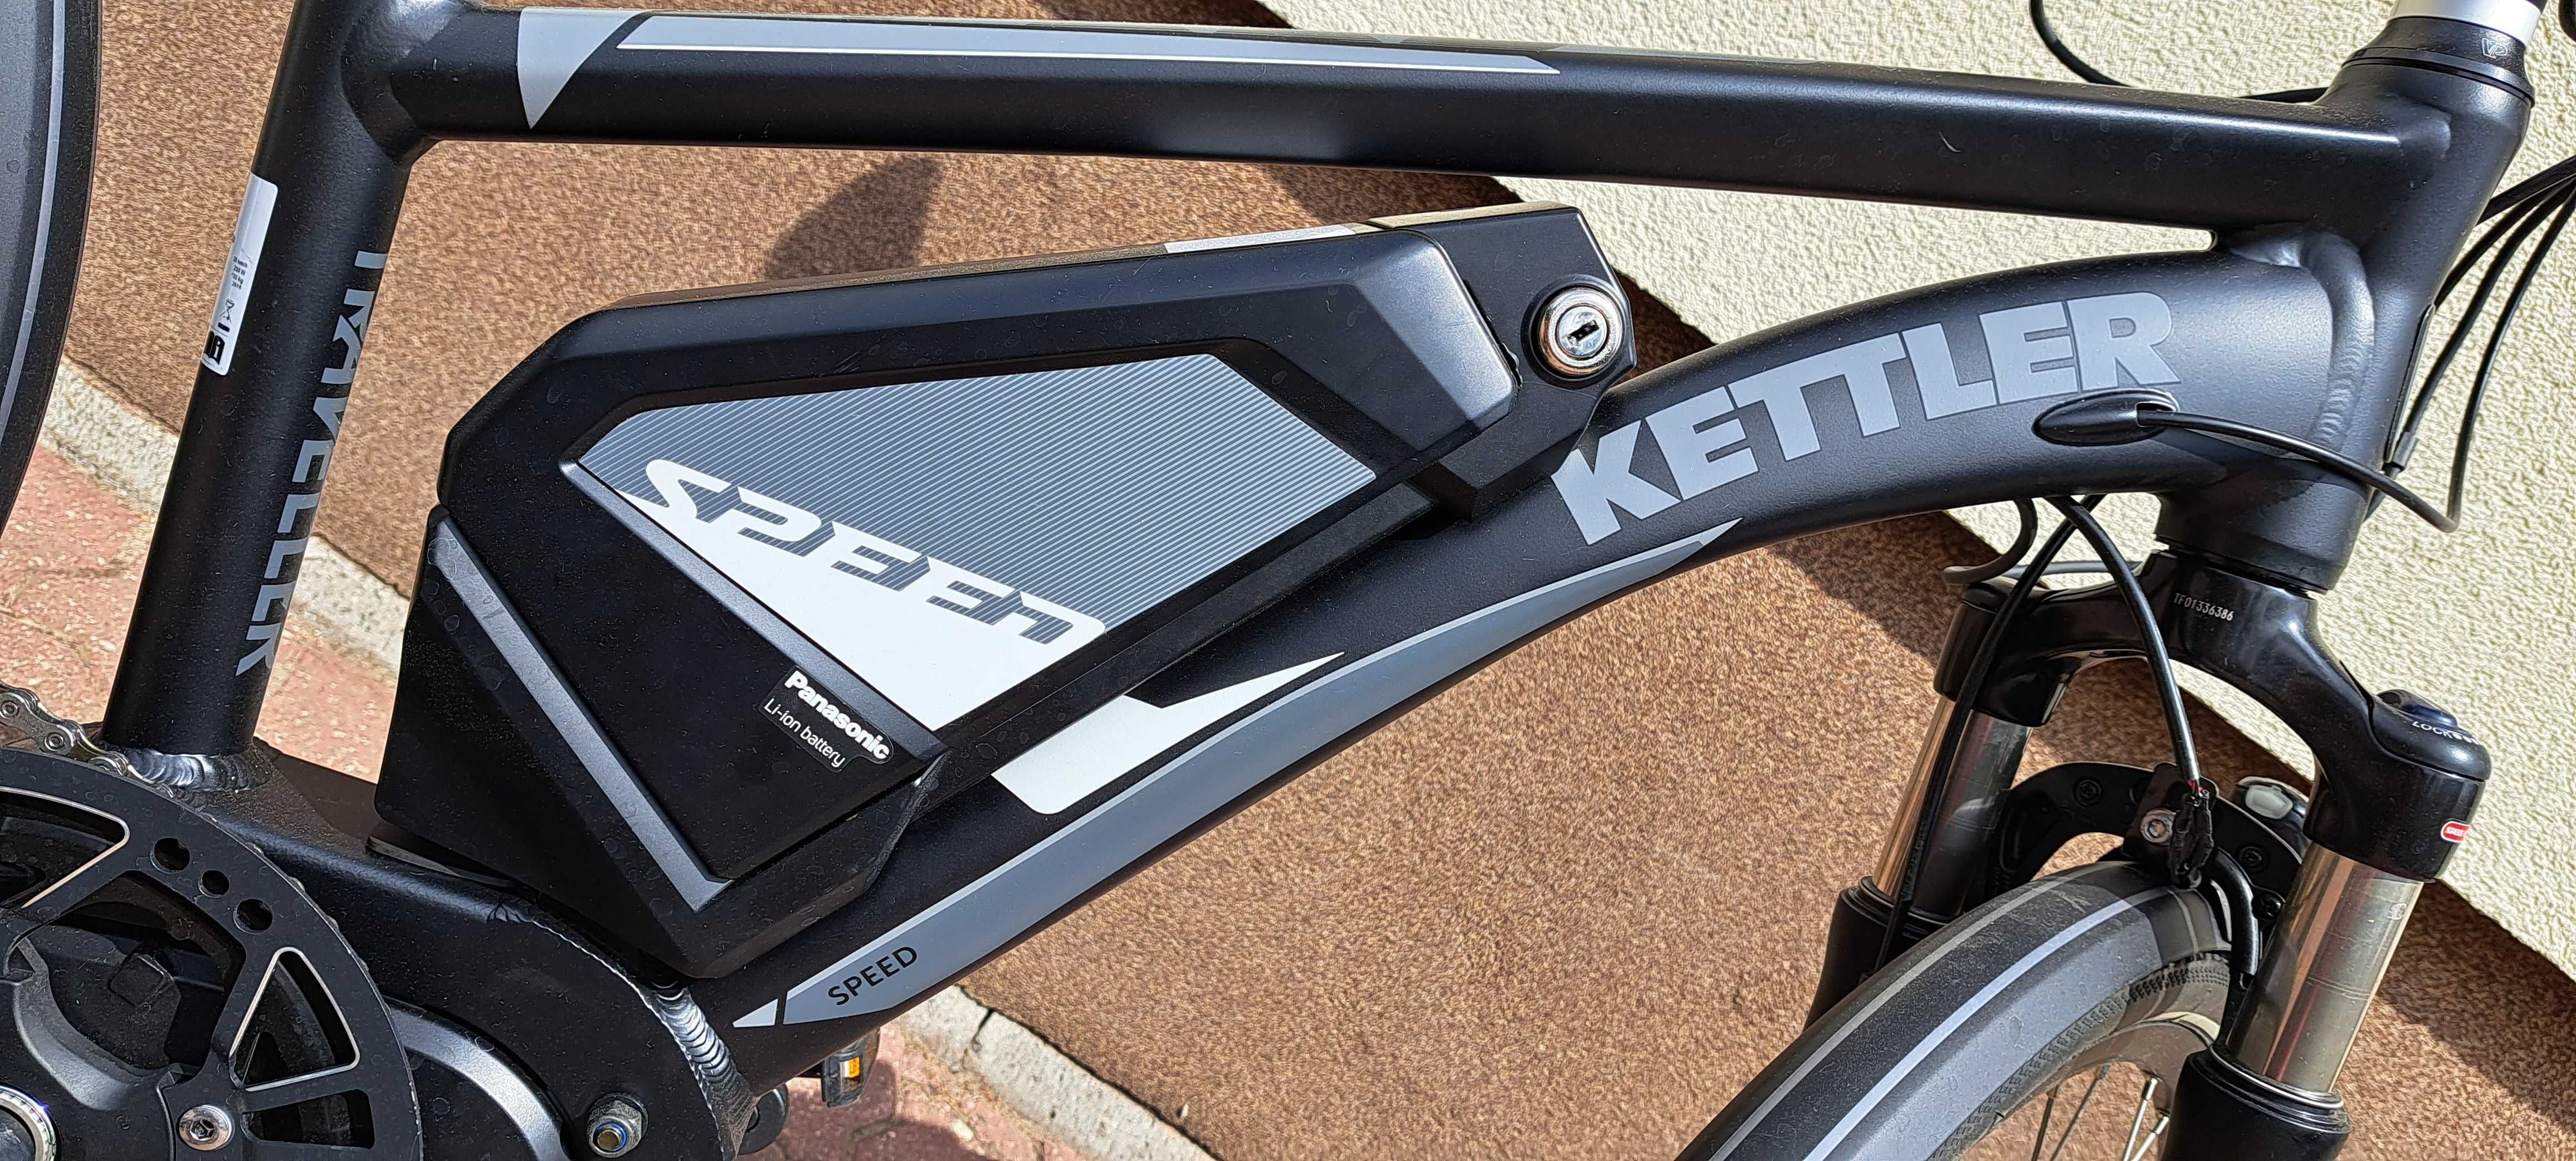 Elektryk Kettler Traveller napęd Panasonic 99% nowy rower elektryczny